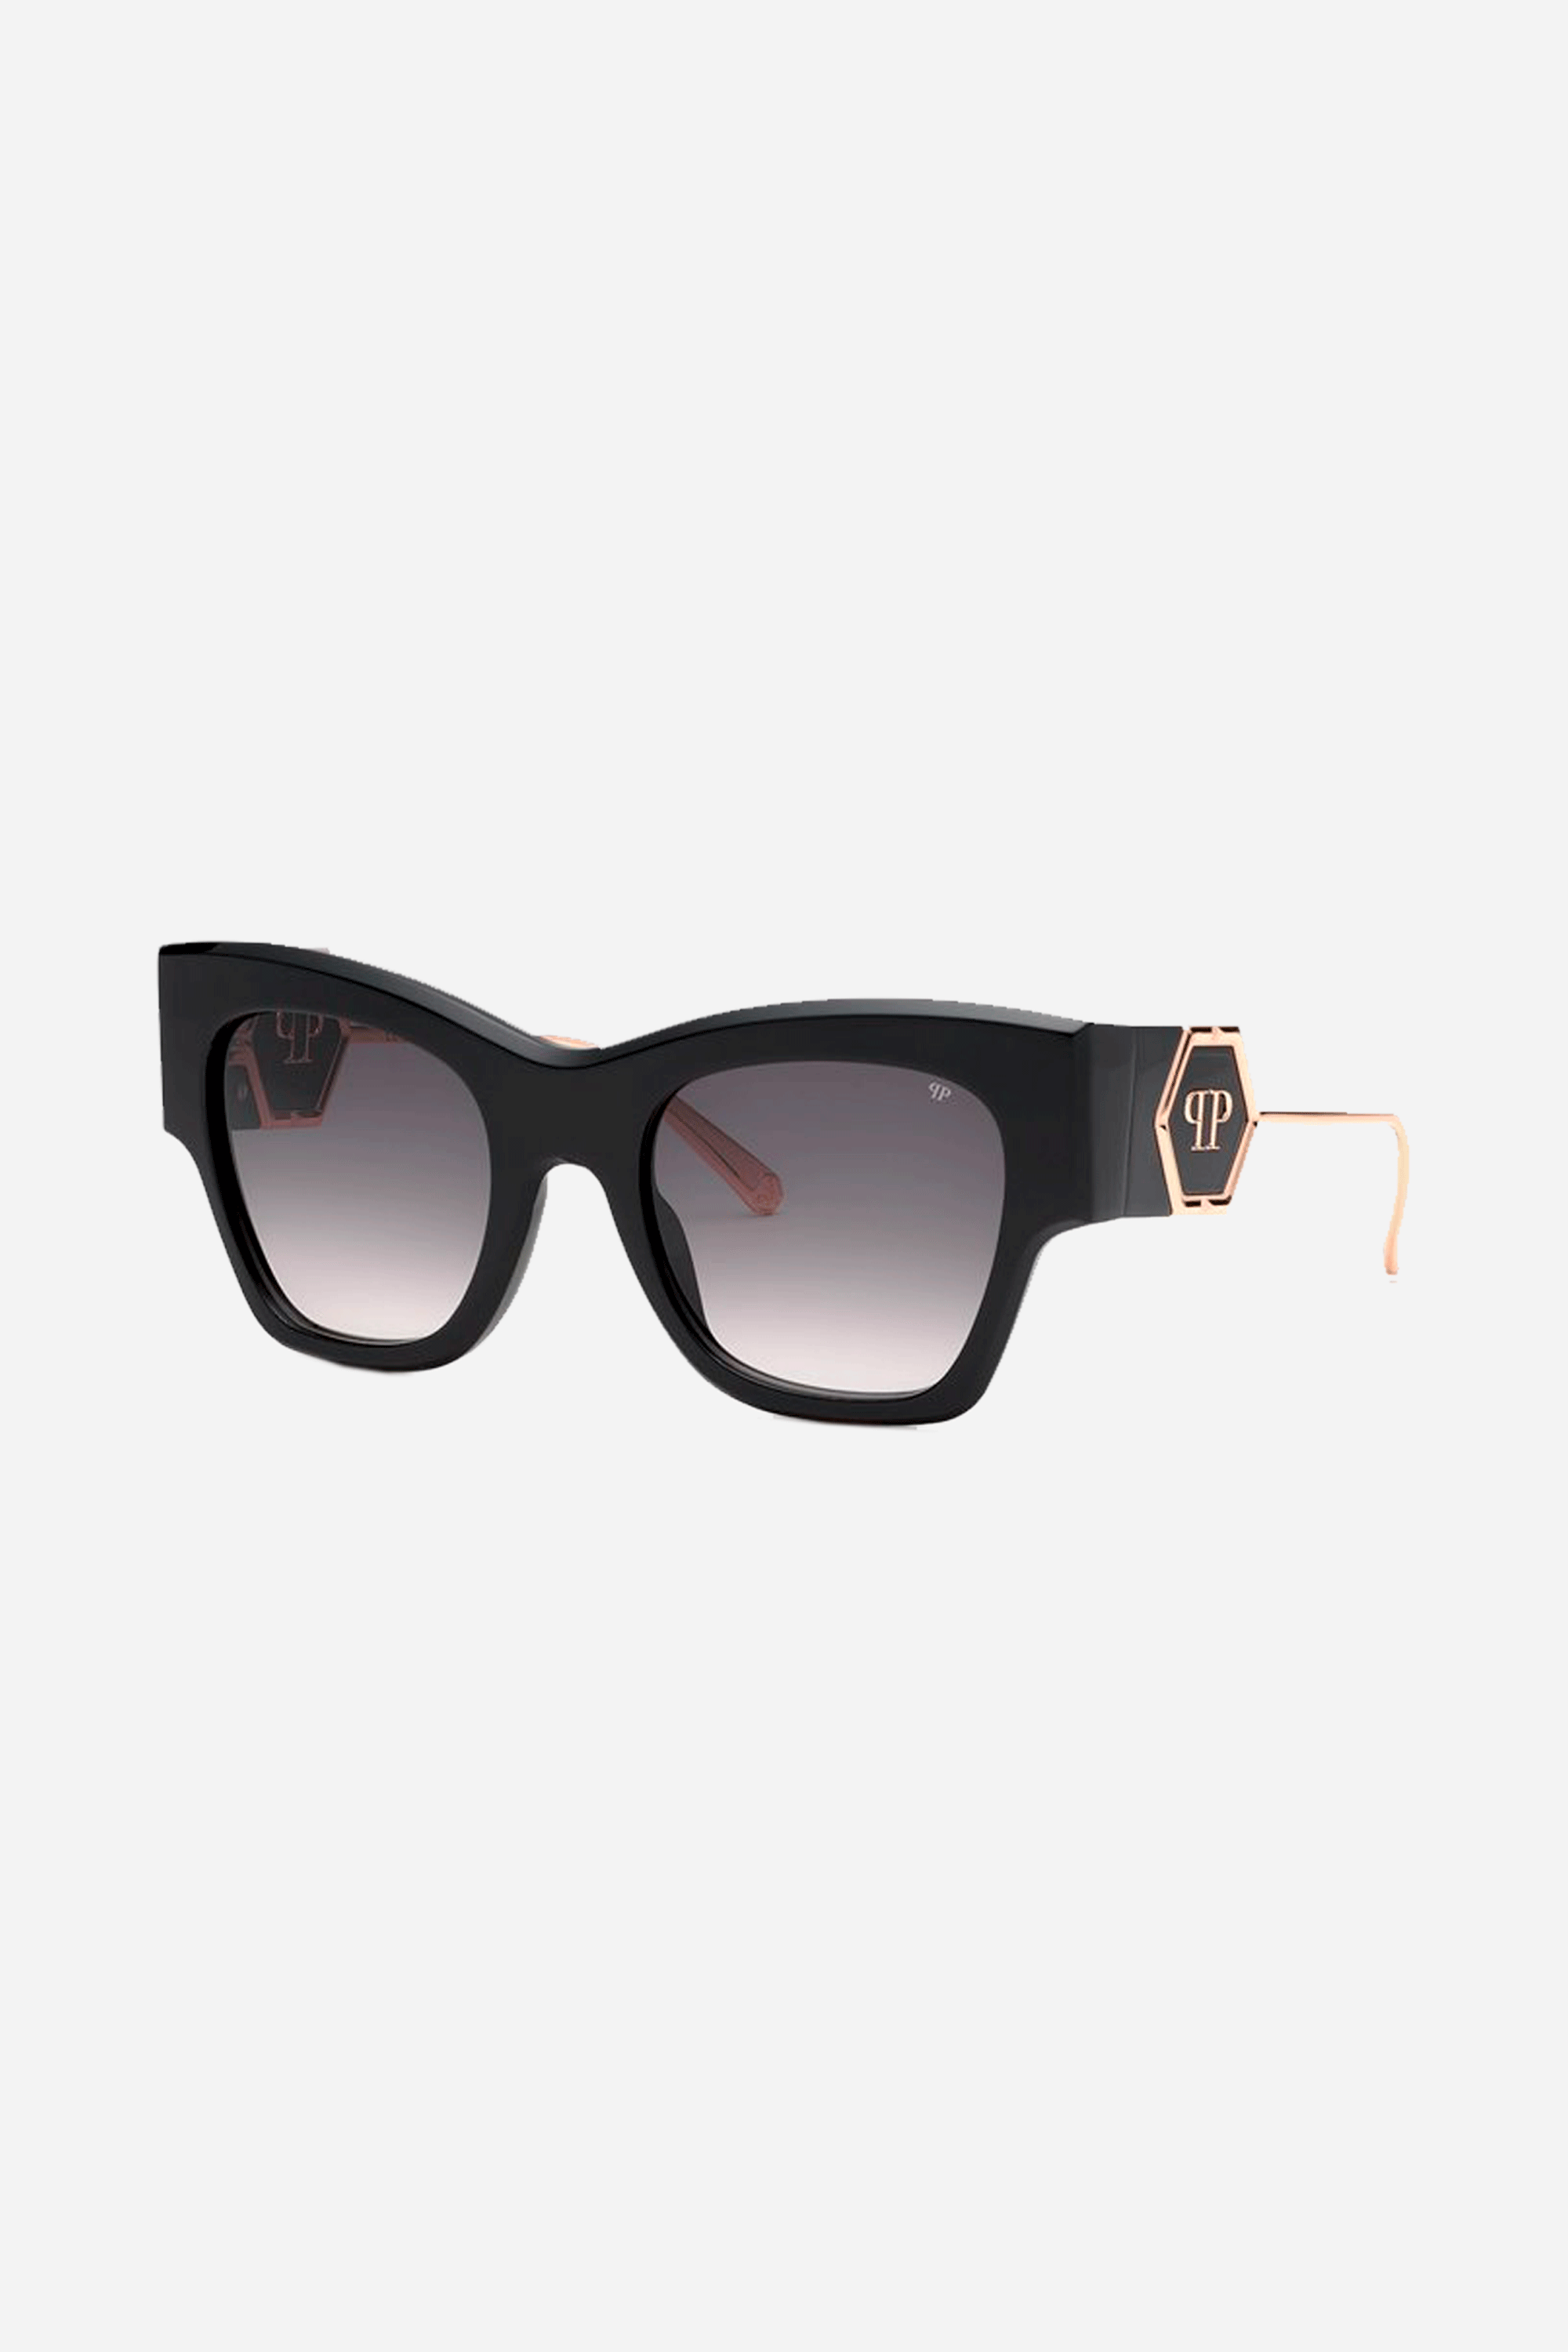 Philipp Plein cat eye black sunglasses - Eyewear Club